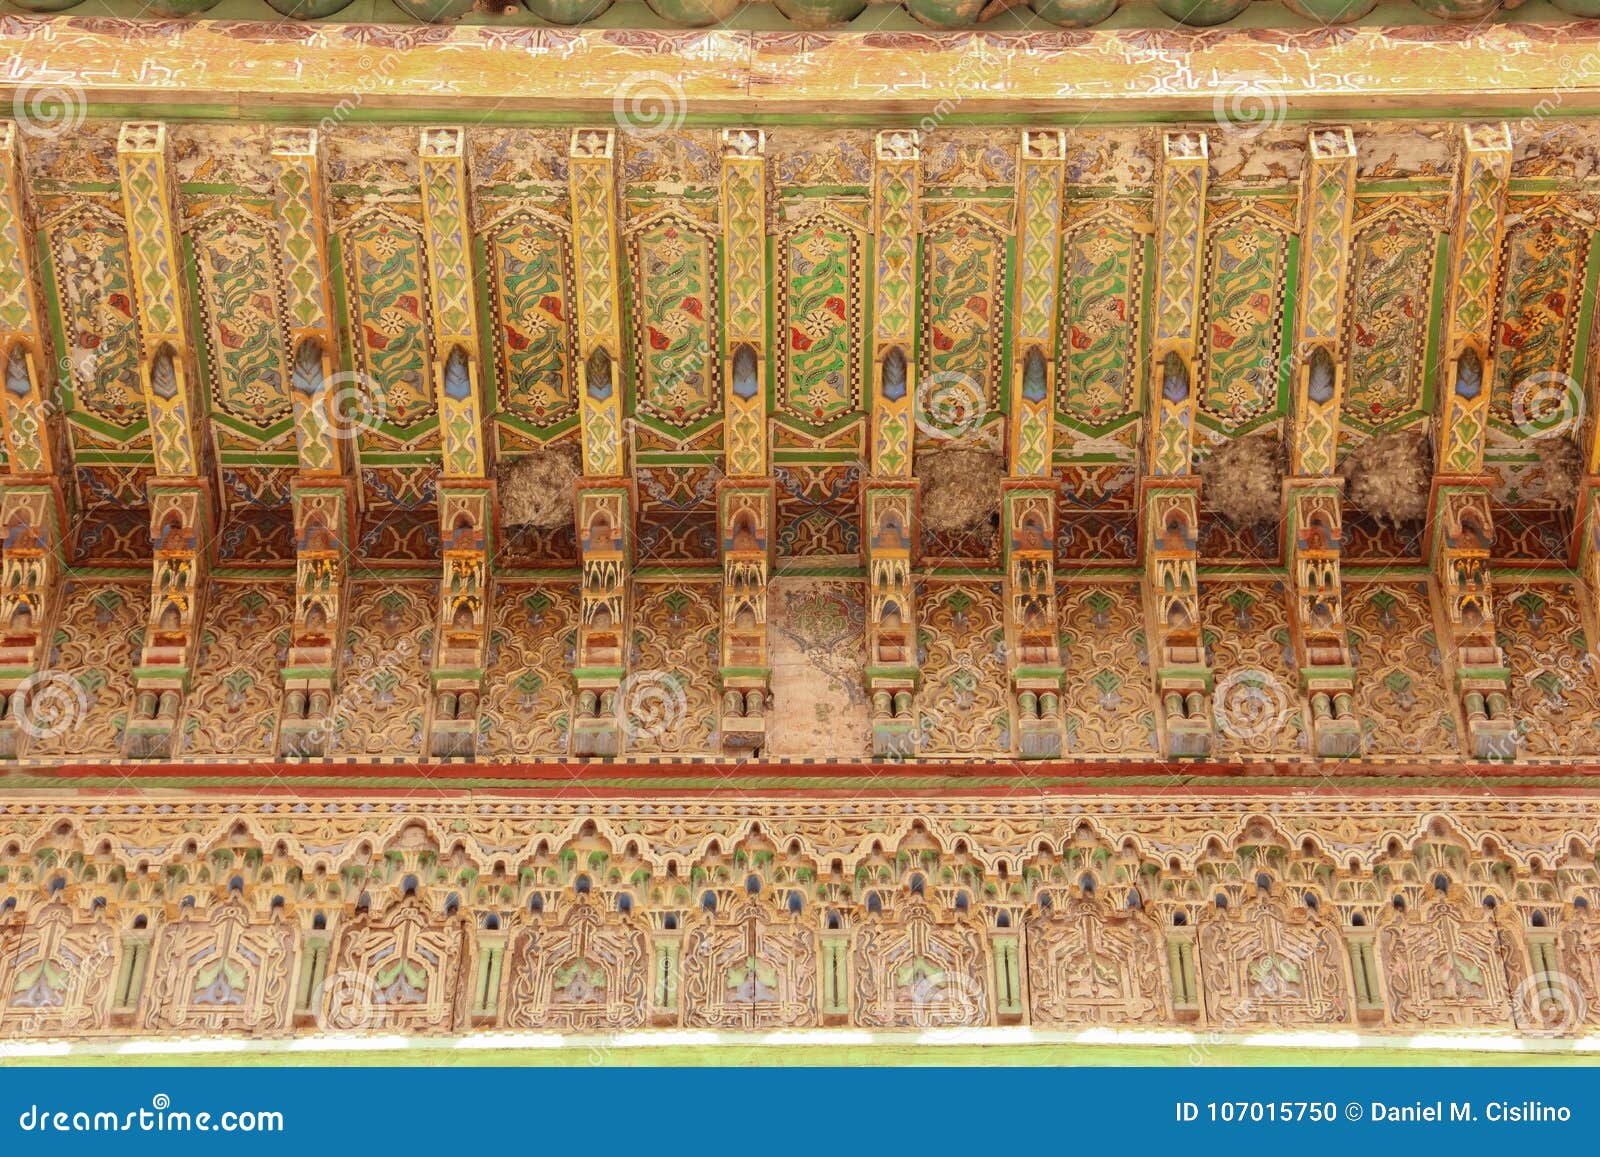 mausoleum. detail. zaouia sidi bel abbes. marrakesh. morocco